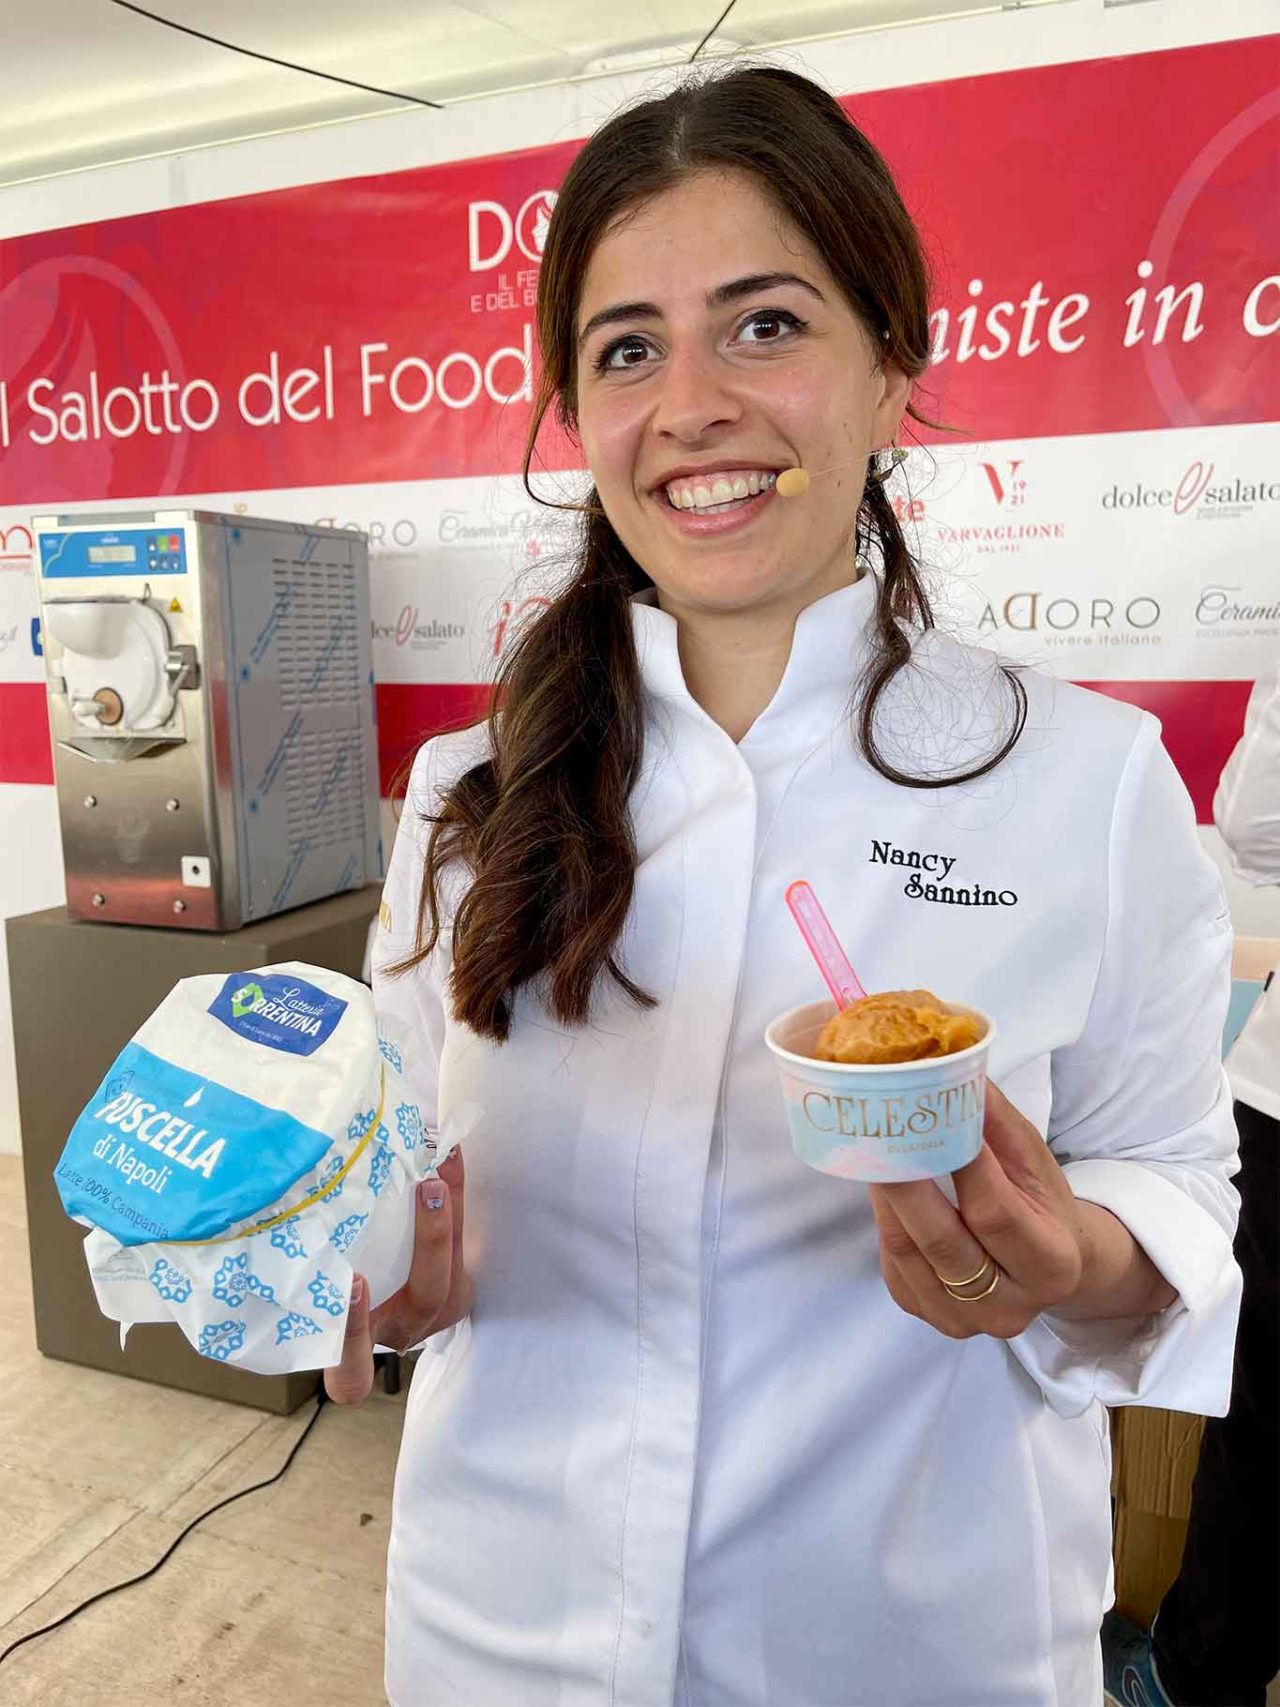 Nancy Sannino gelato Celestina